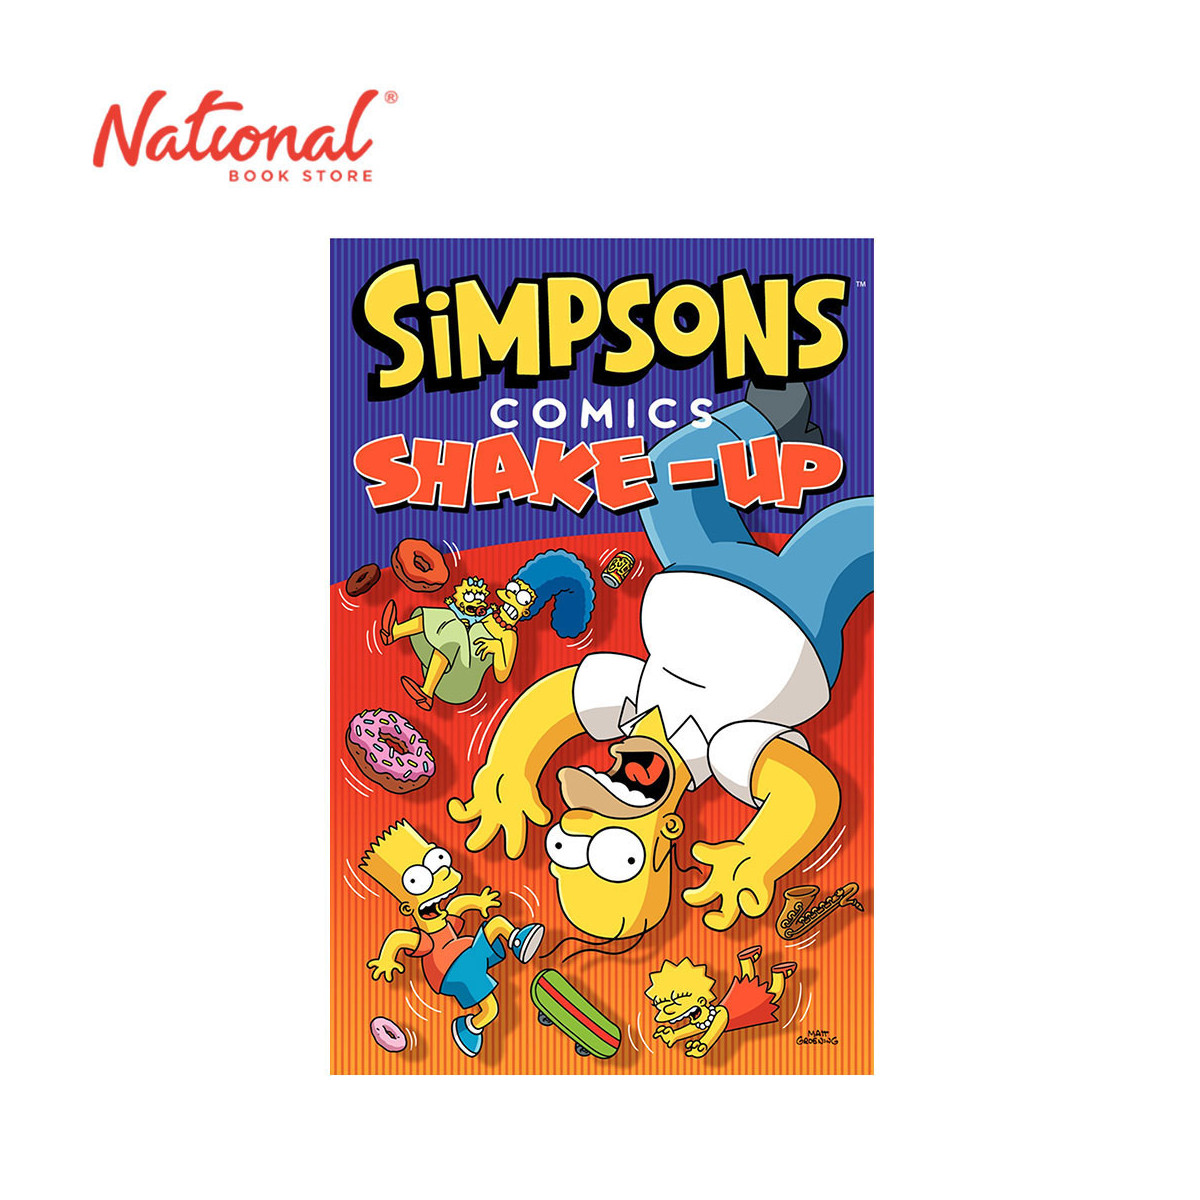 Simpsons Comics: Shake Up by Matt Groening - Trade Paperback - Graphic Novels